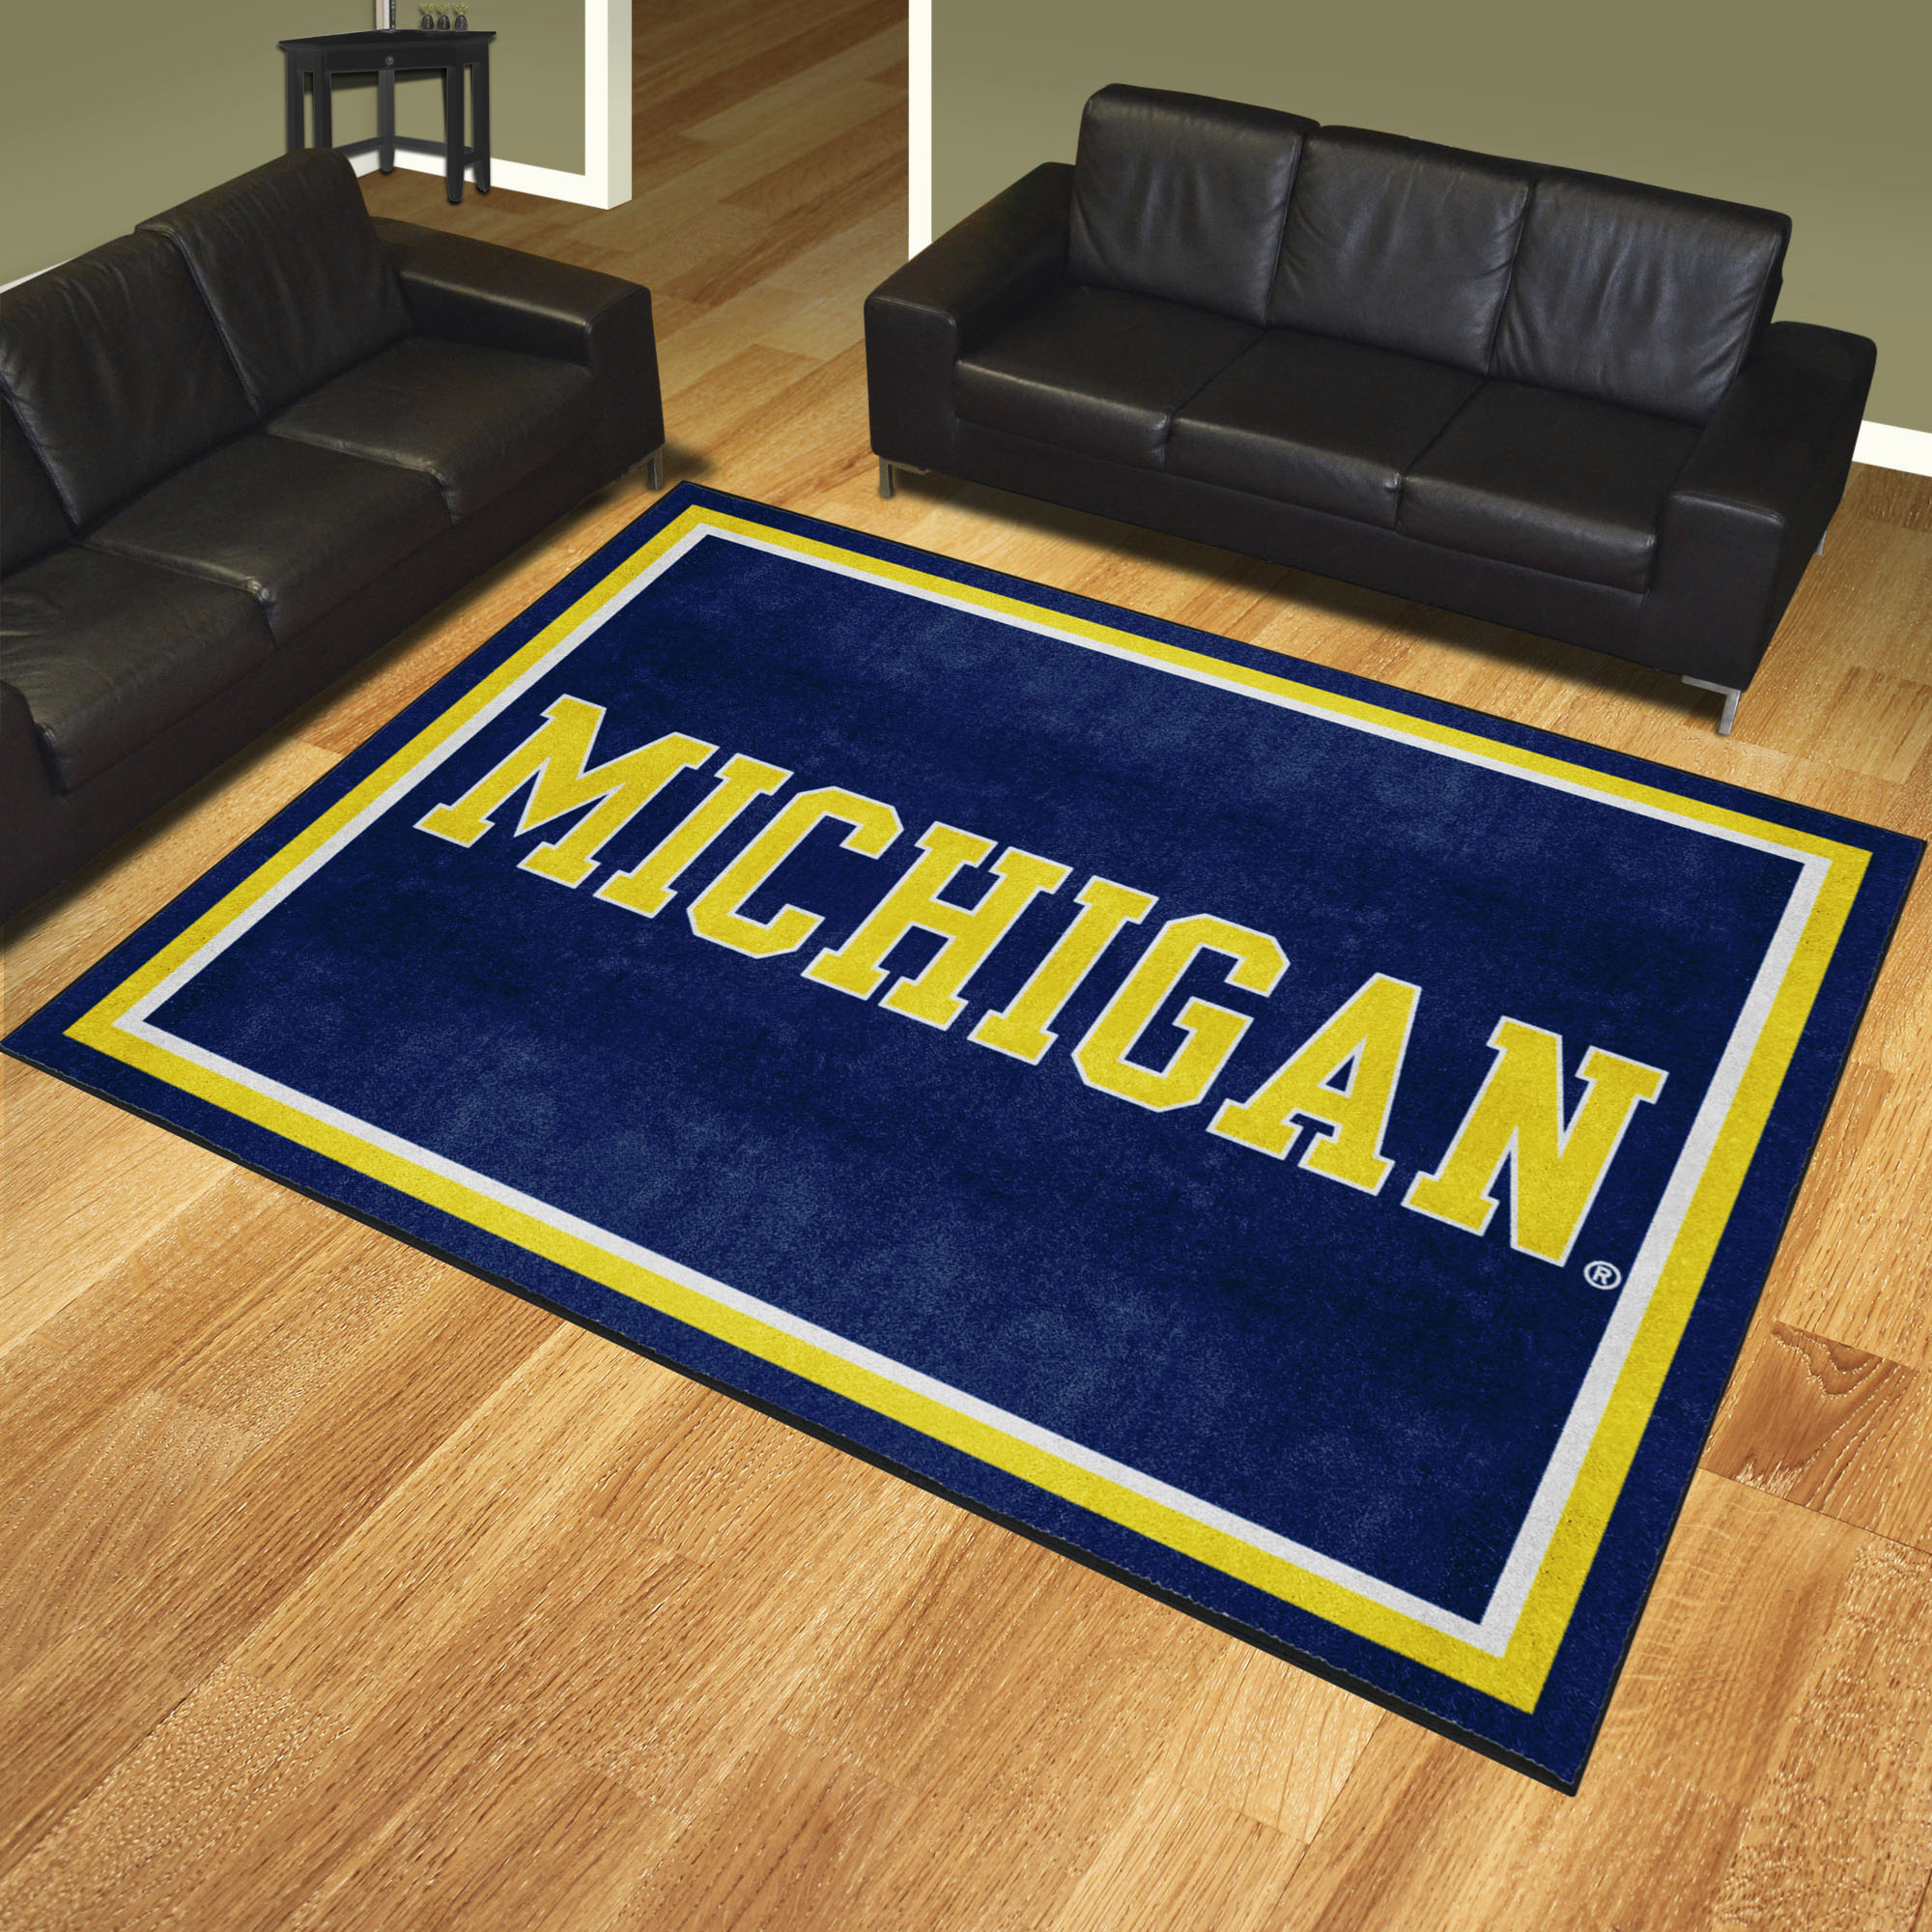 Michigan Wolverines Area Rug - 8' x 10' Wordmark Nylon